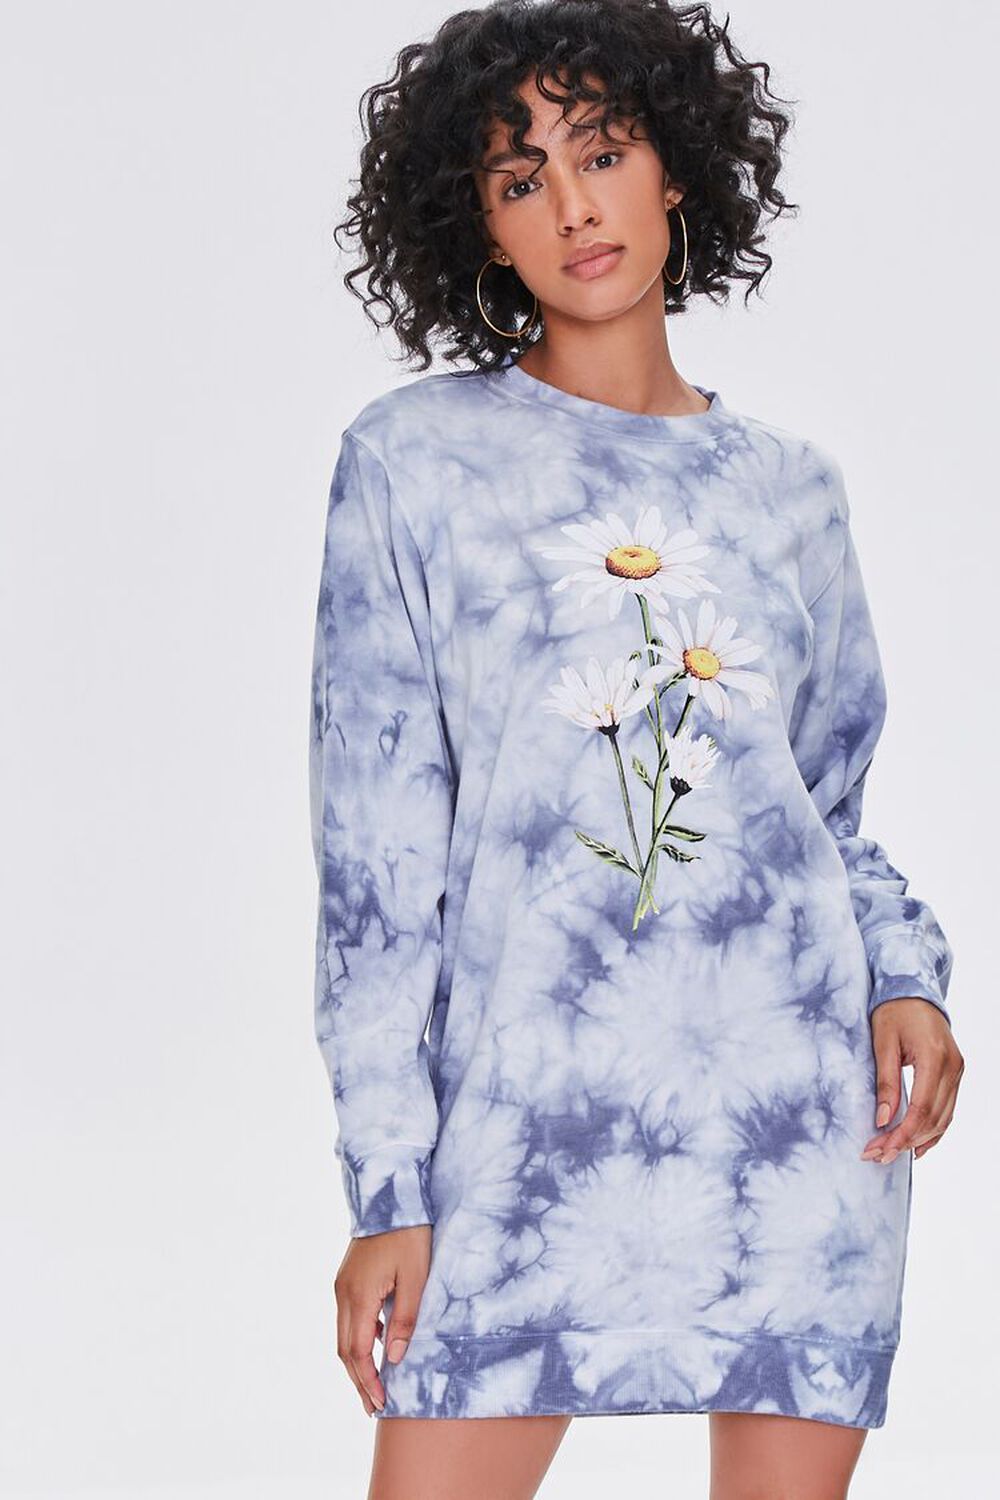 BLUE/MULTI Tie-Dye Floral Graphic Dress, image 1